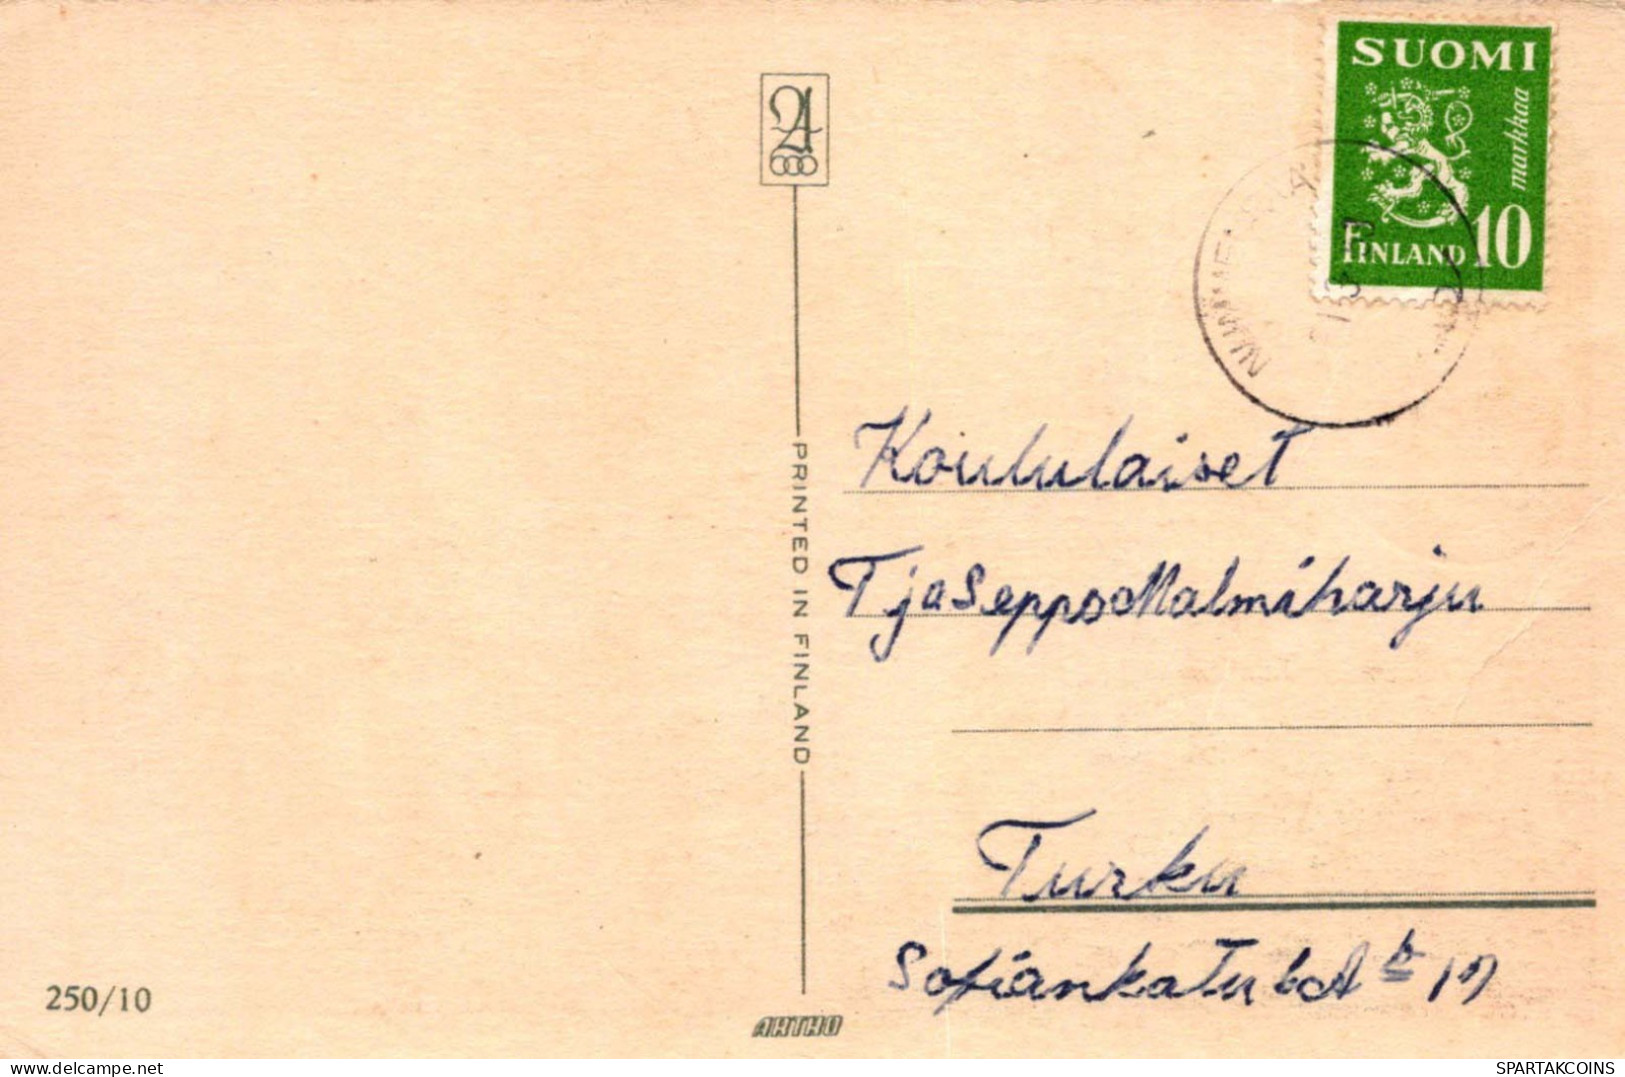 PASQUA BAMBINO UOVO Vintage Cartolina CPA #PKE233.A - Ostern